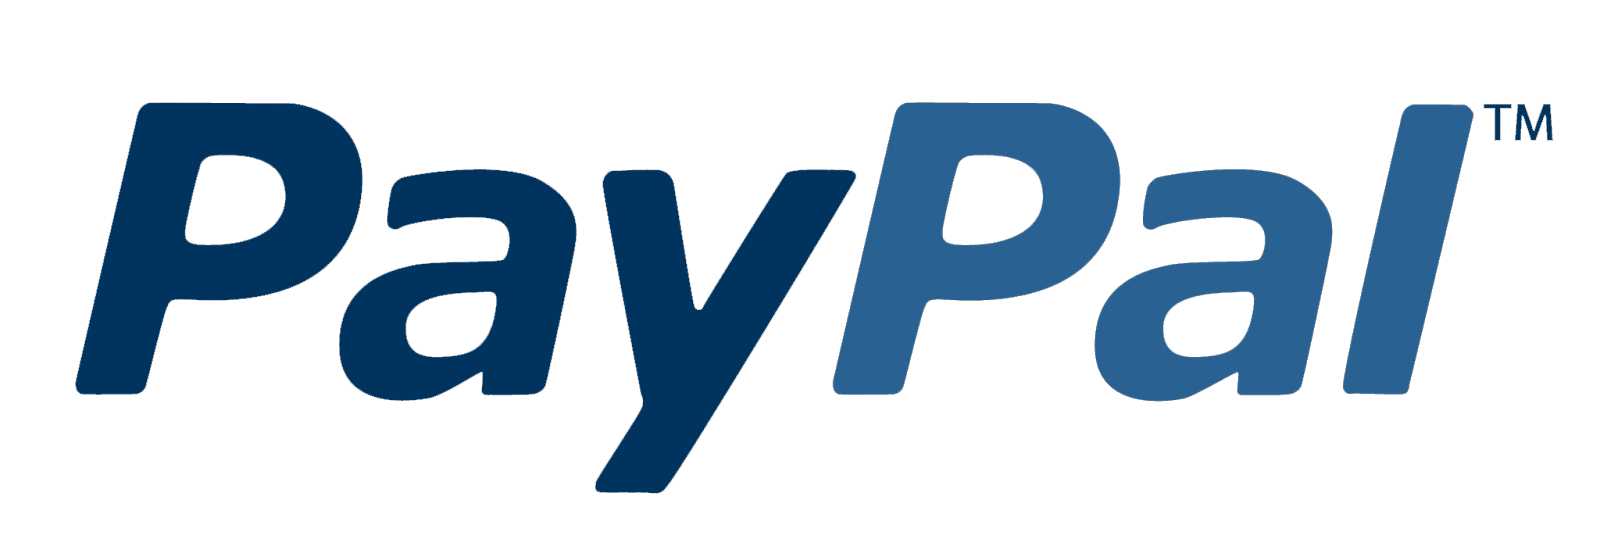 Paypal Card Logo Sketch freebie - Download free resource for 